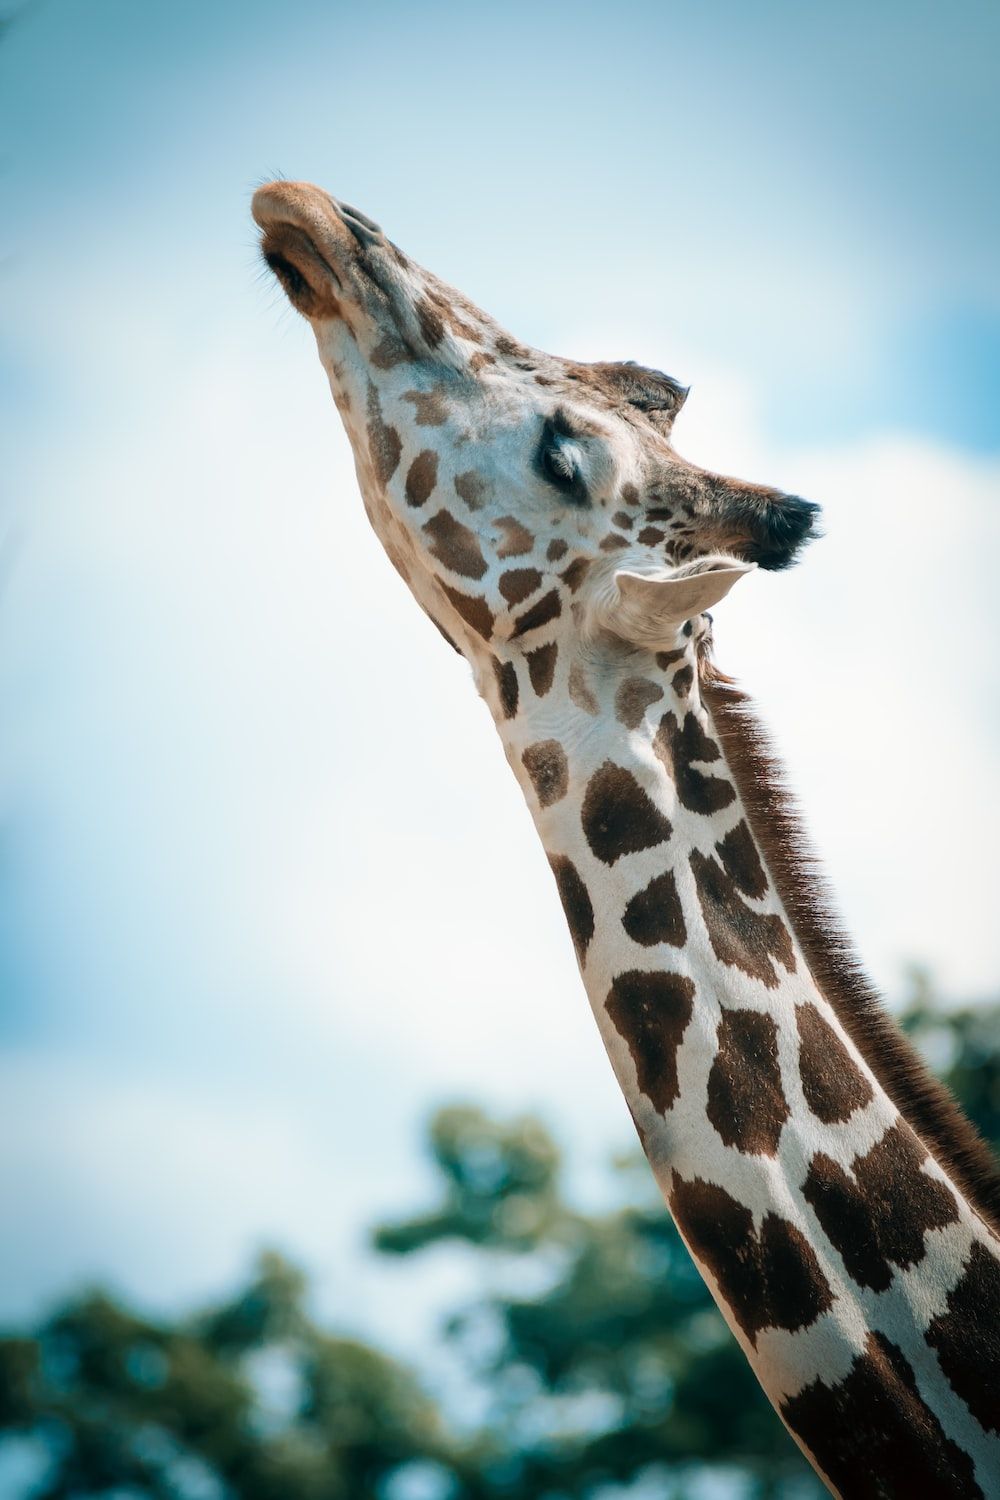  Giraffe Hintergrundbild 1000x1500. Giraffe Picture [HD]. Download Free Image